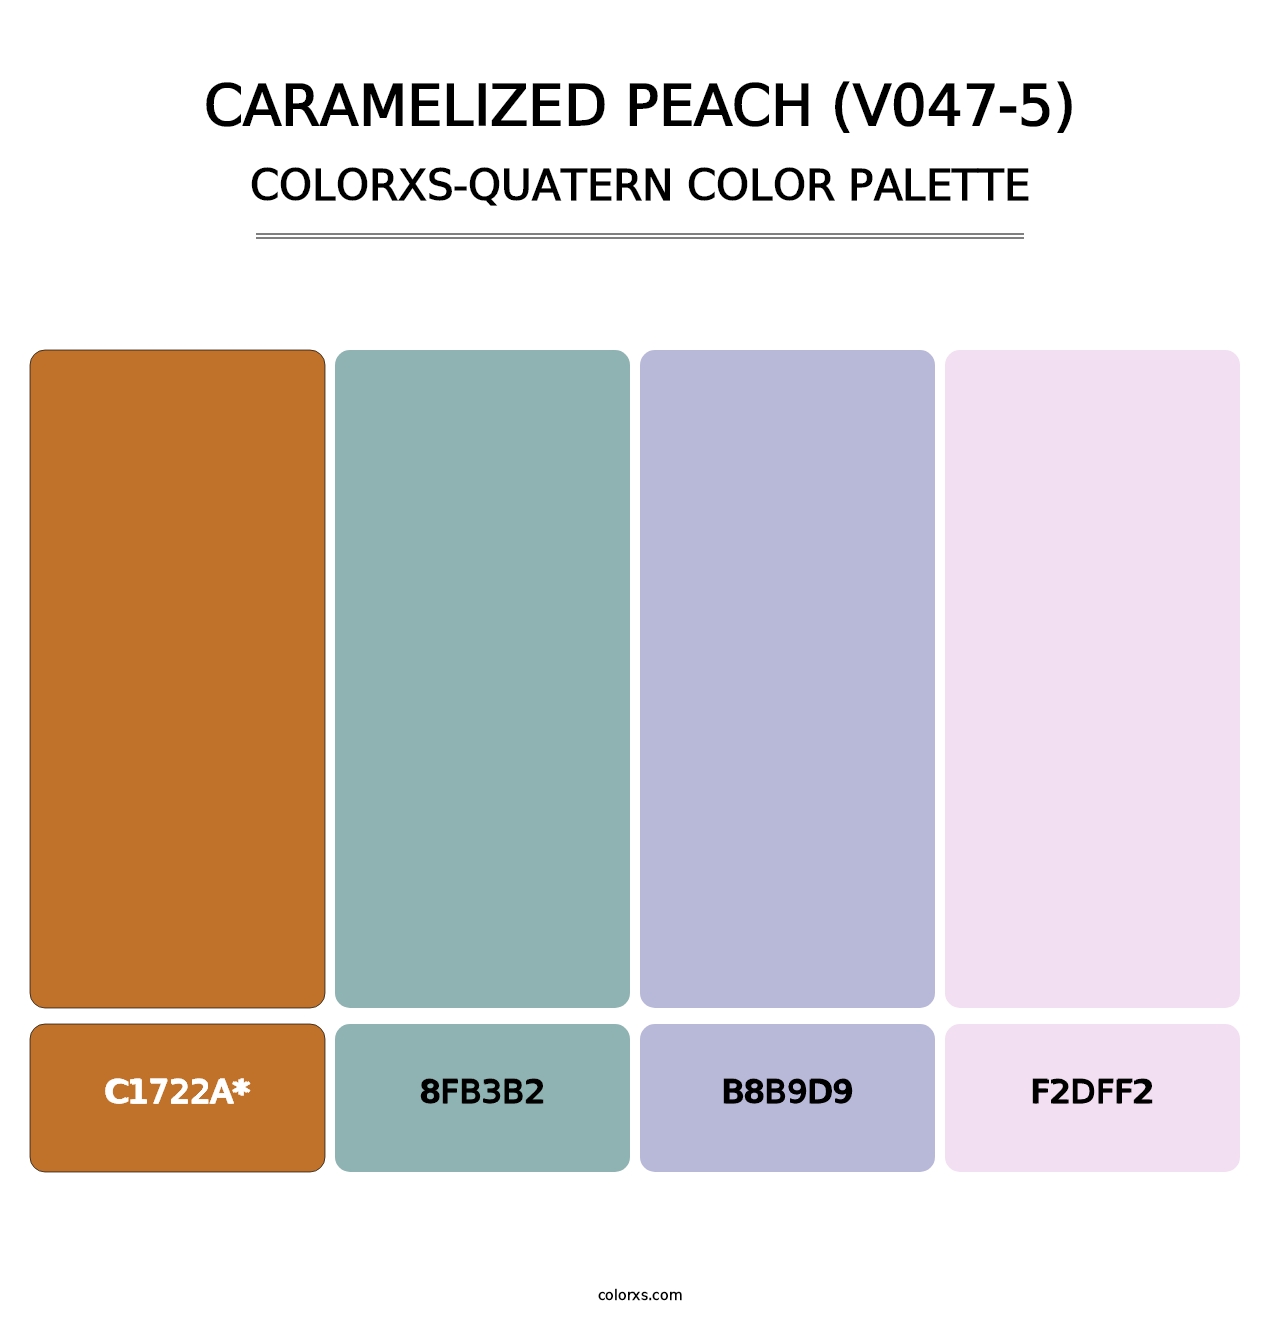 Caramelized Peach (V047-5) - Colorxs Quatern Palette